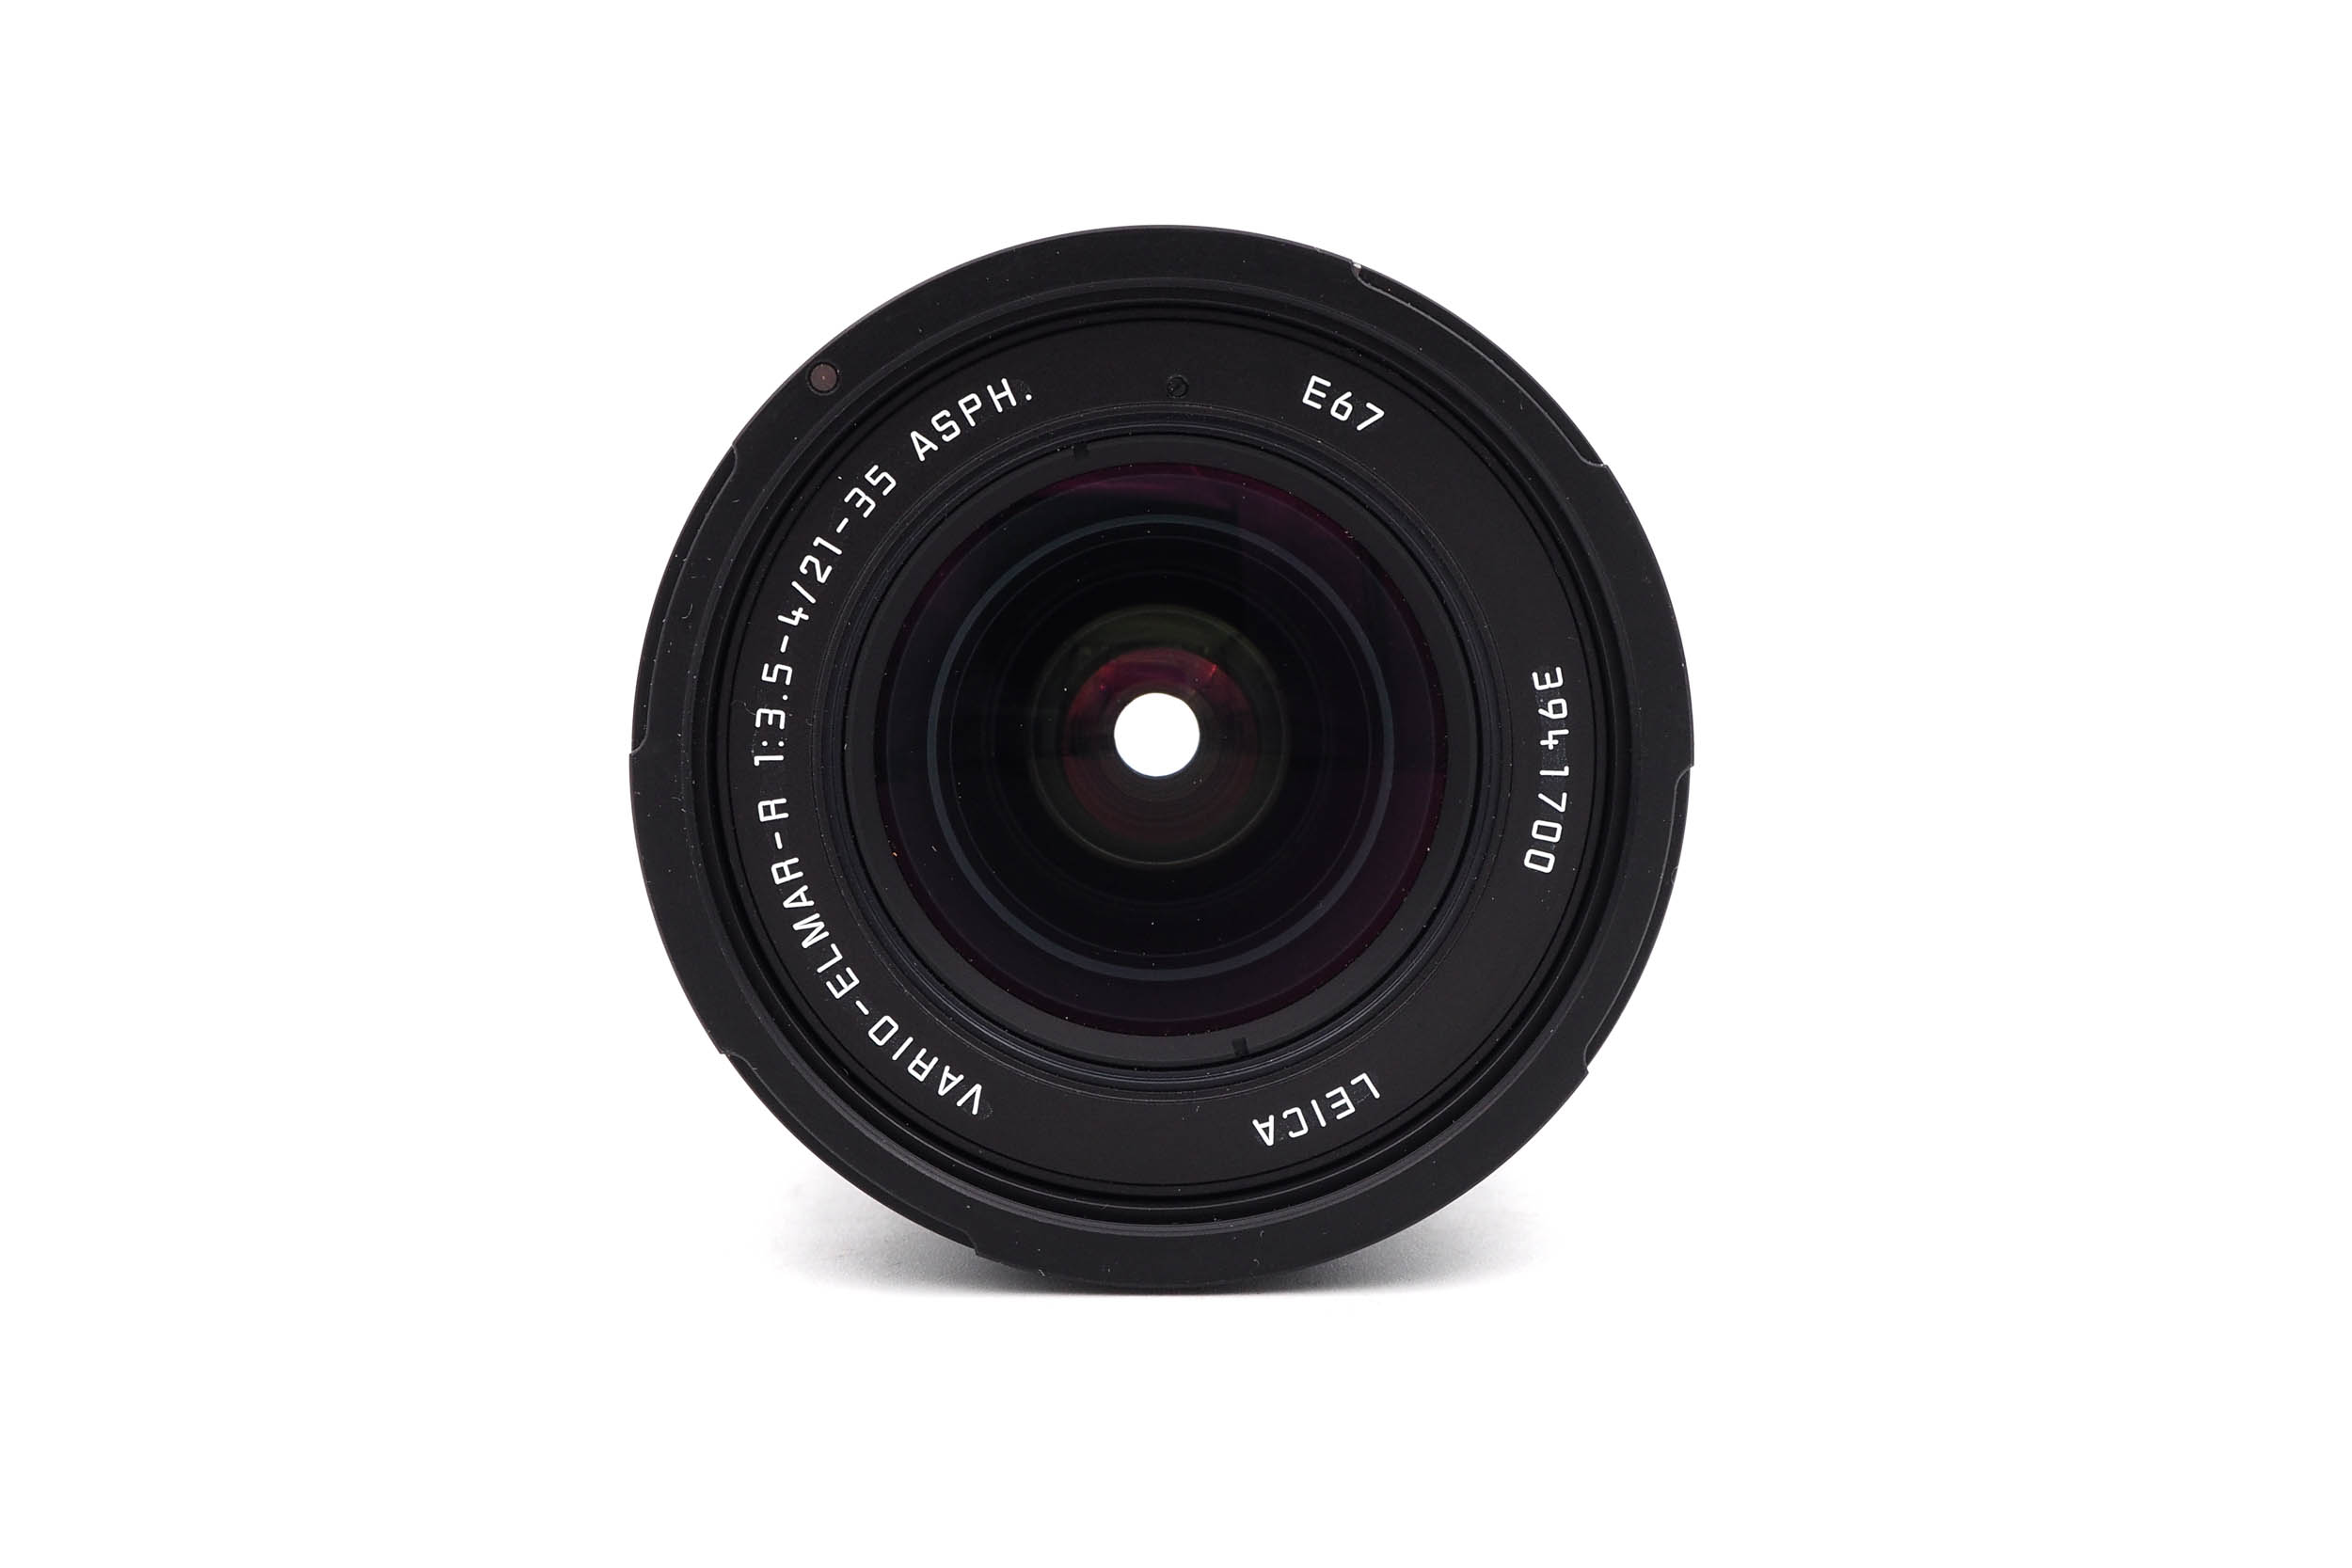 Leica 21-35mm f/3.5-4 Vario-Elmar-R ASPH